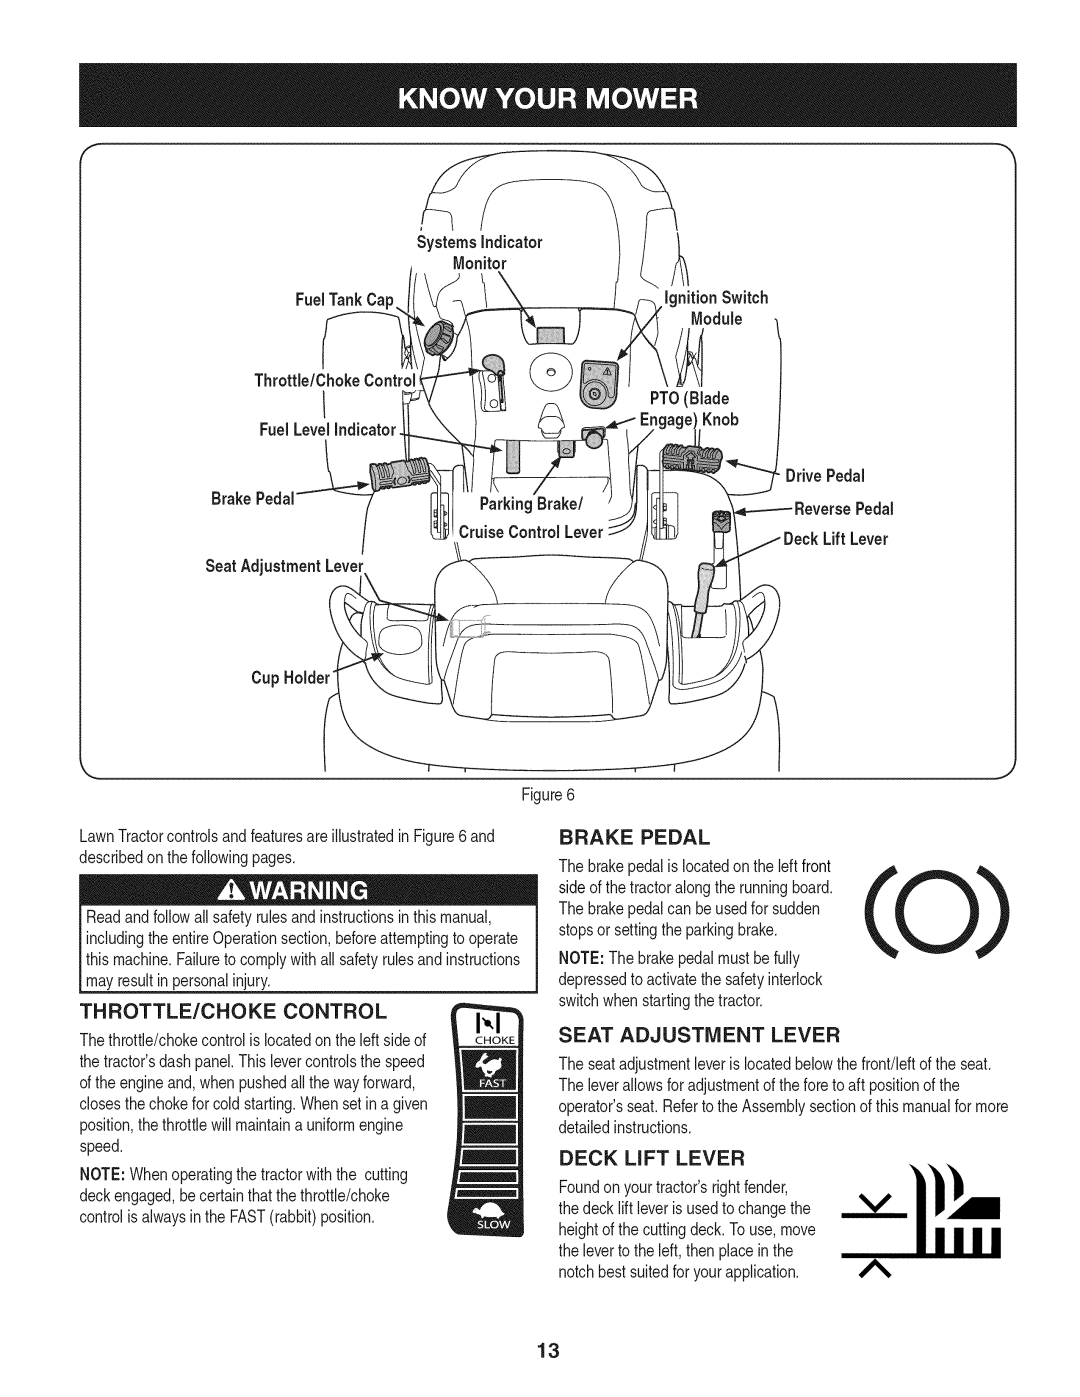 Craftsman 247.28672 Throttle/Choke Control, Seat Adjustment Lever, Deck Lift Lever, FueITankCap, IgnitionSwitch, Module 